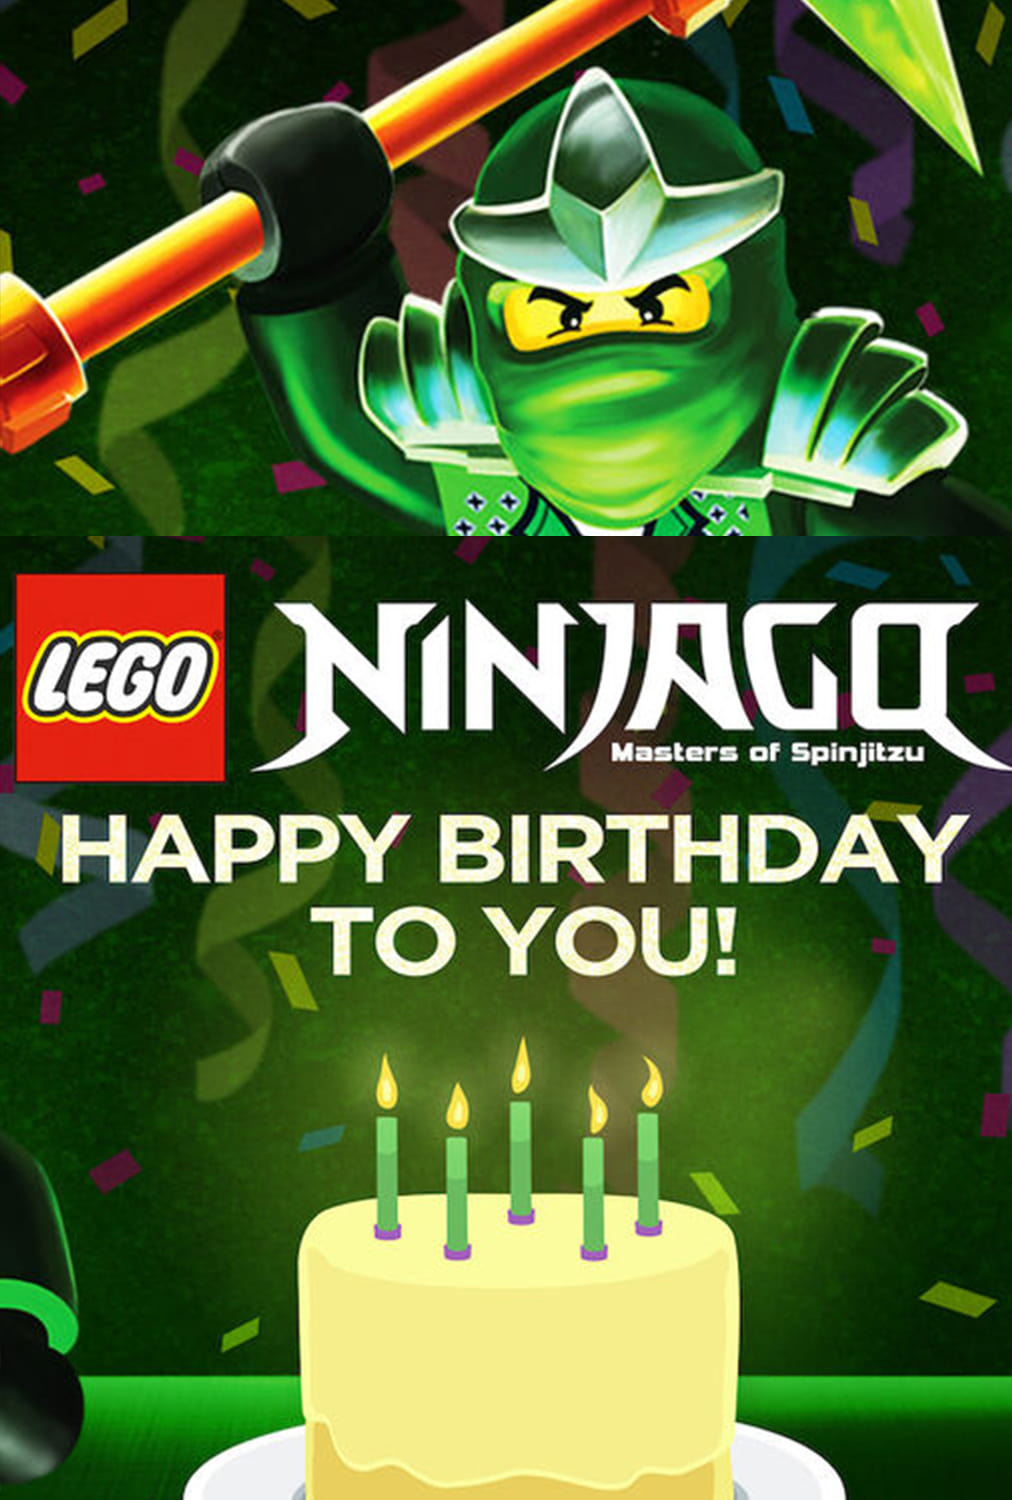 LEGO Ninjago: Happy Birthday to You!